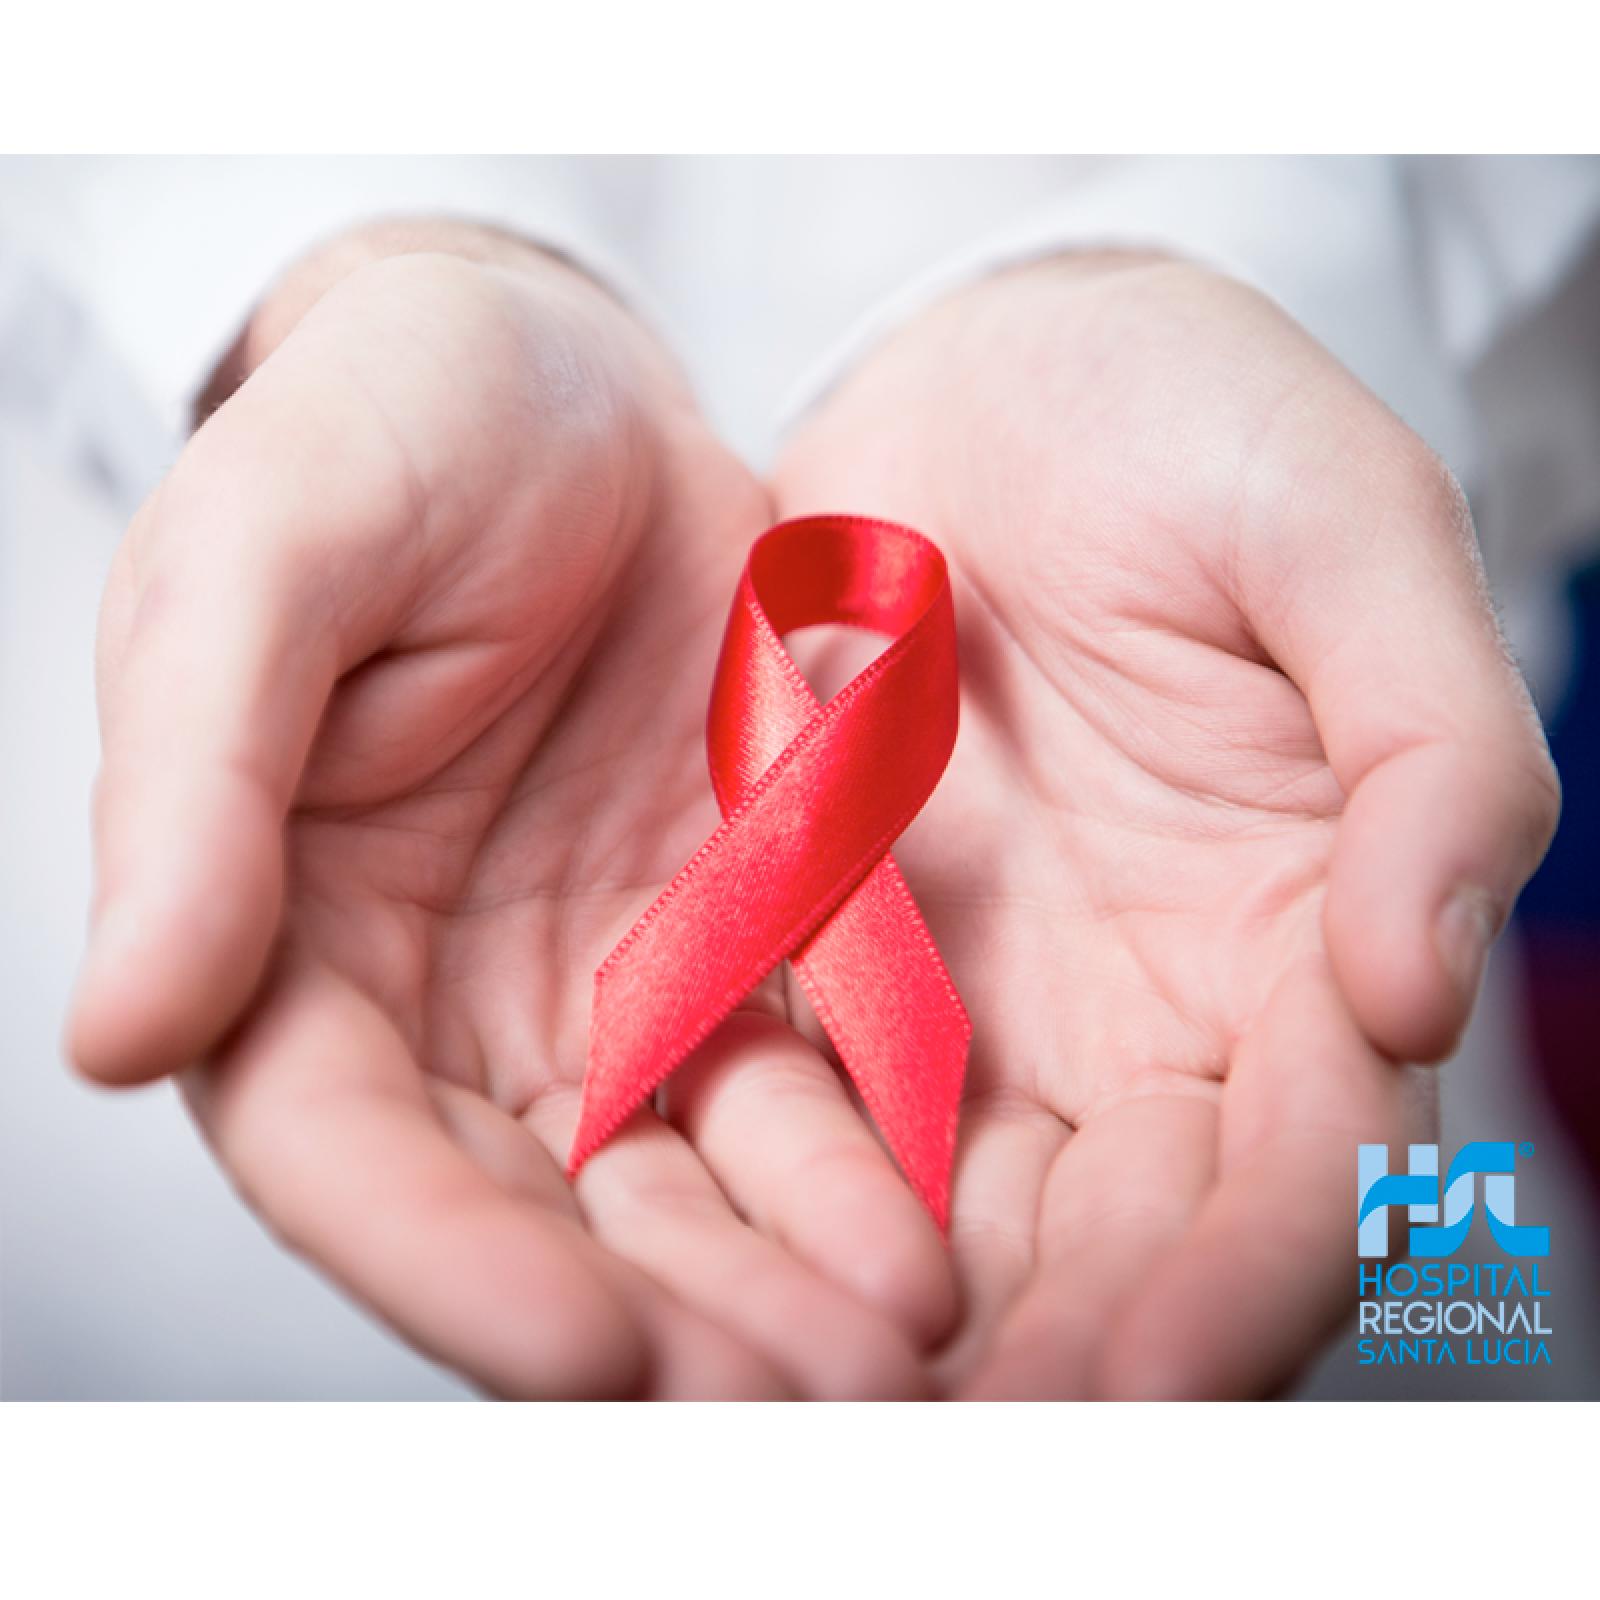 1º de dezembro: O Dia Mundial de Combate à Aids